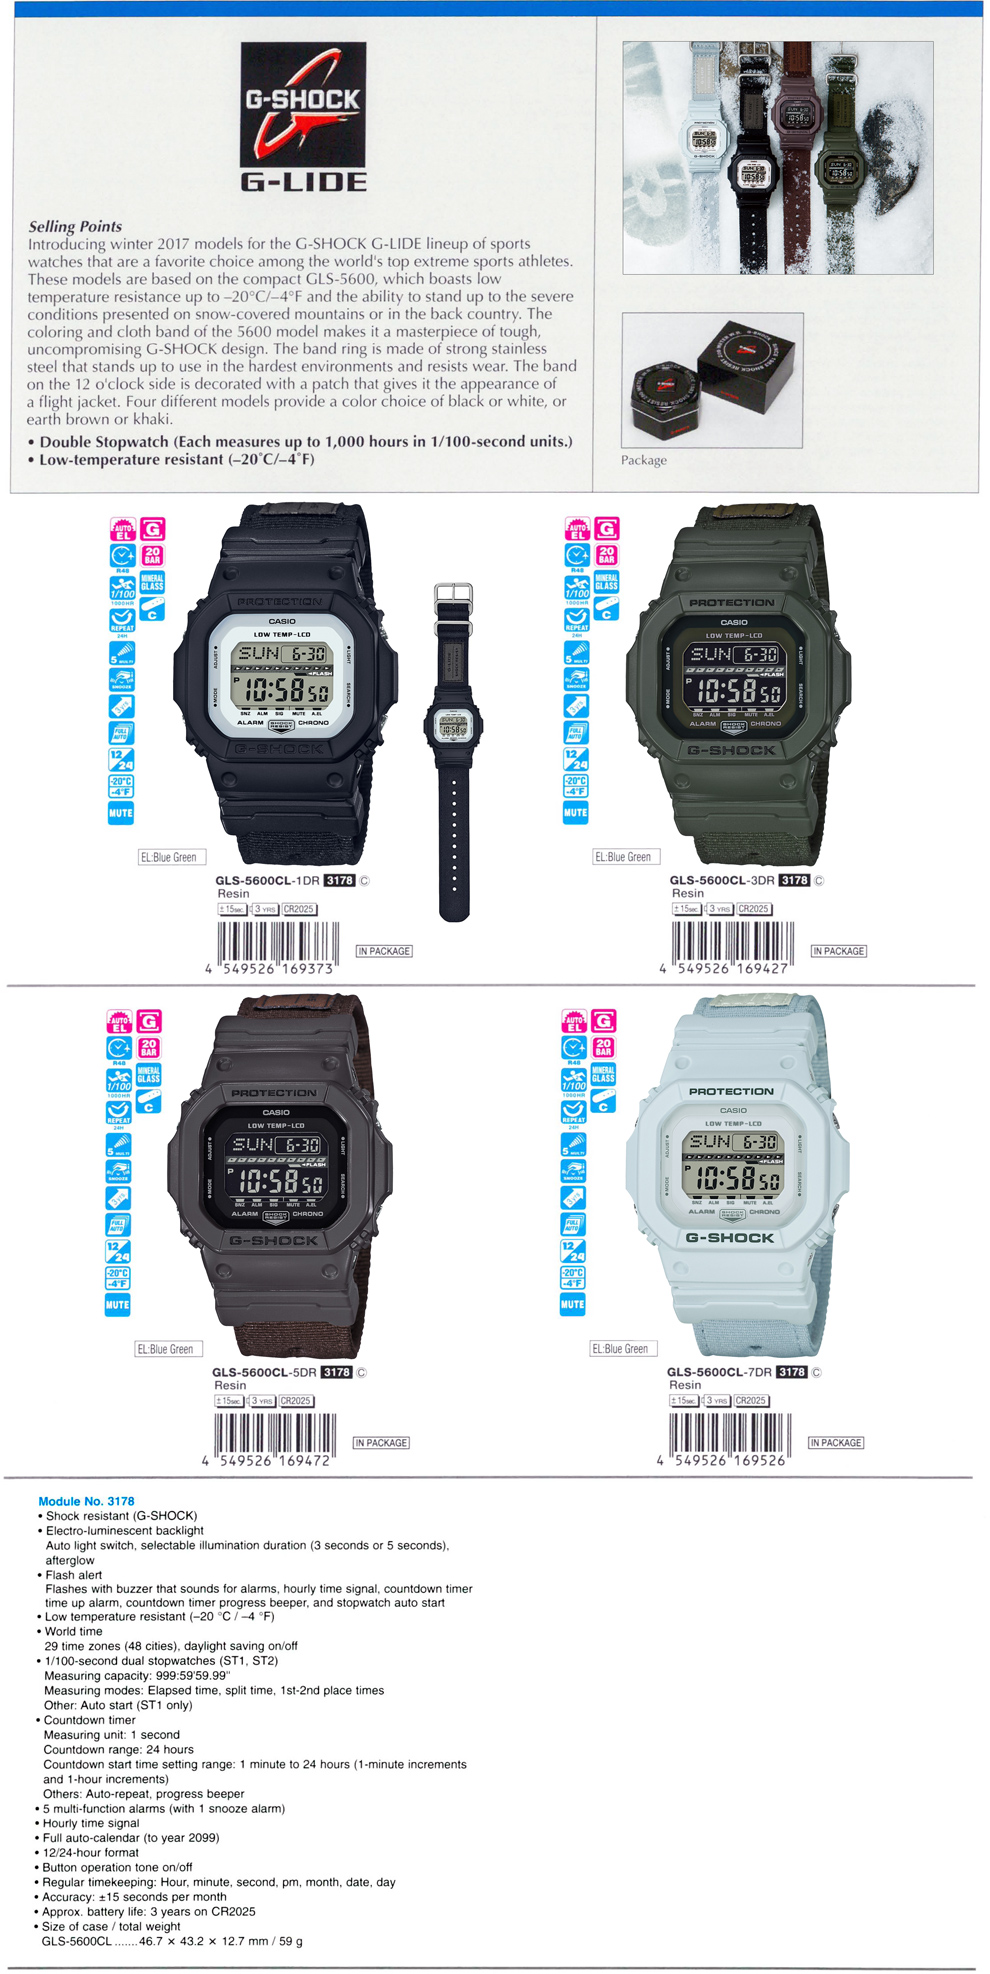 G-SHOCK, G-LIDE, Double stopwatch, Low-temperature resistant, GLS-5600CL-1, GLS-5600CL-3, GLS-5600CL-5, GLS-5600CL-7